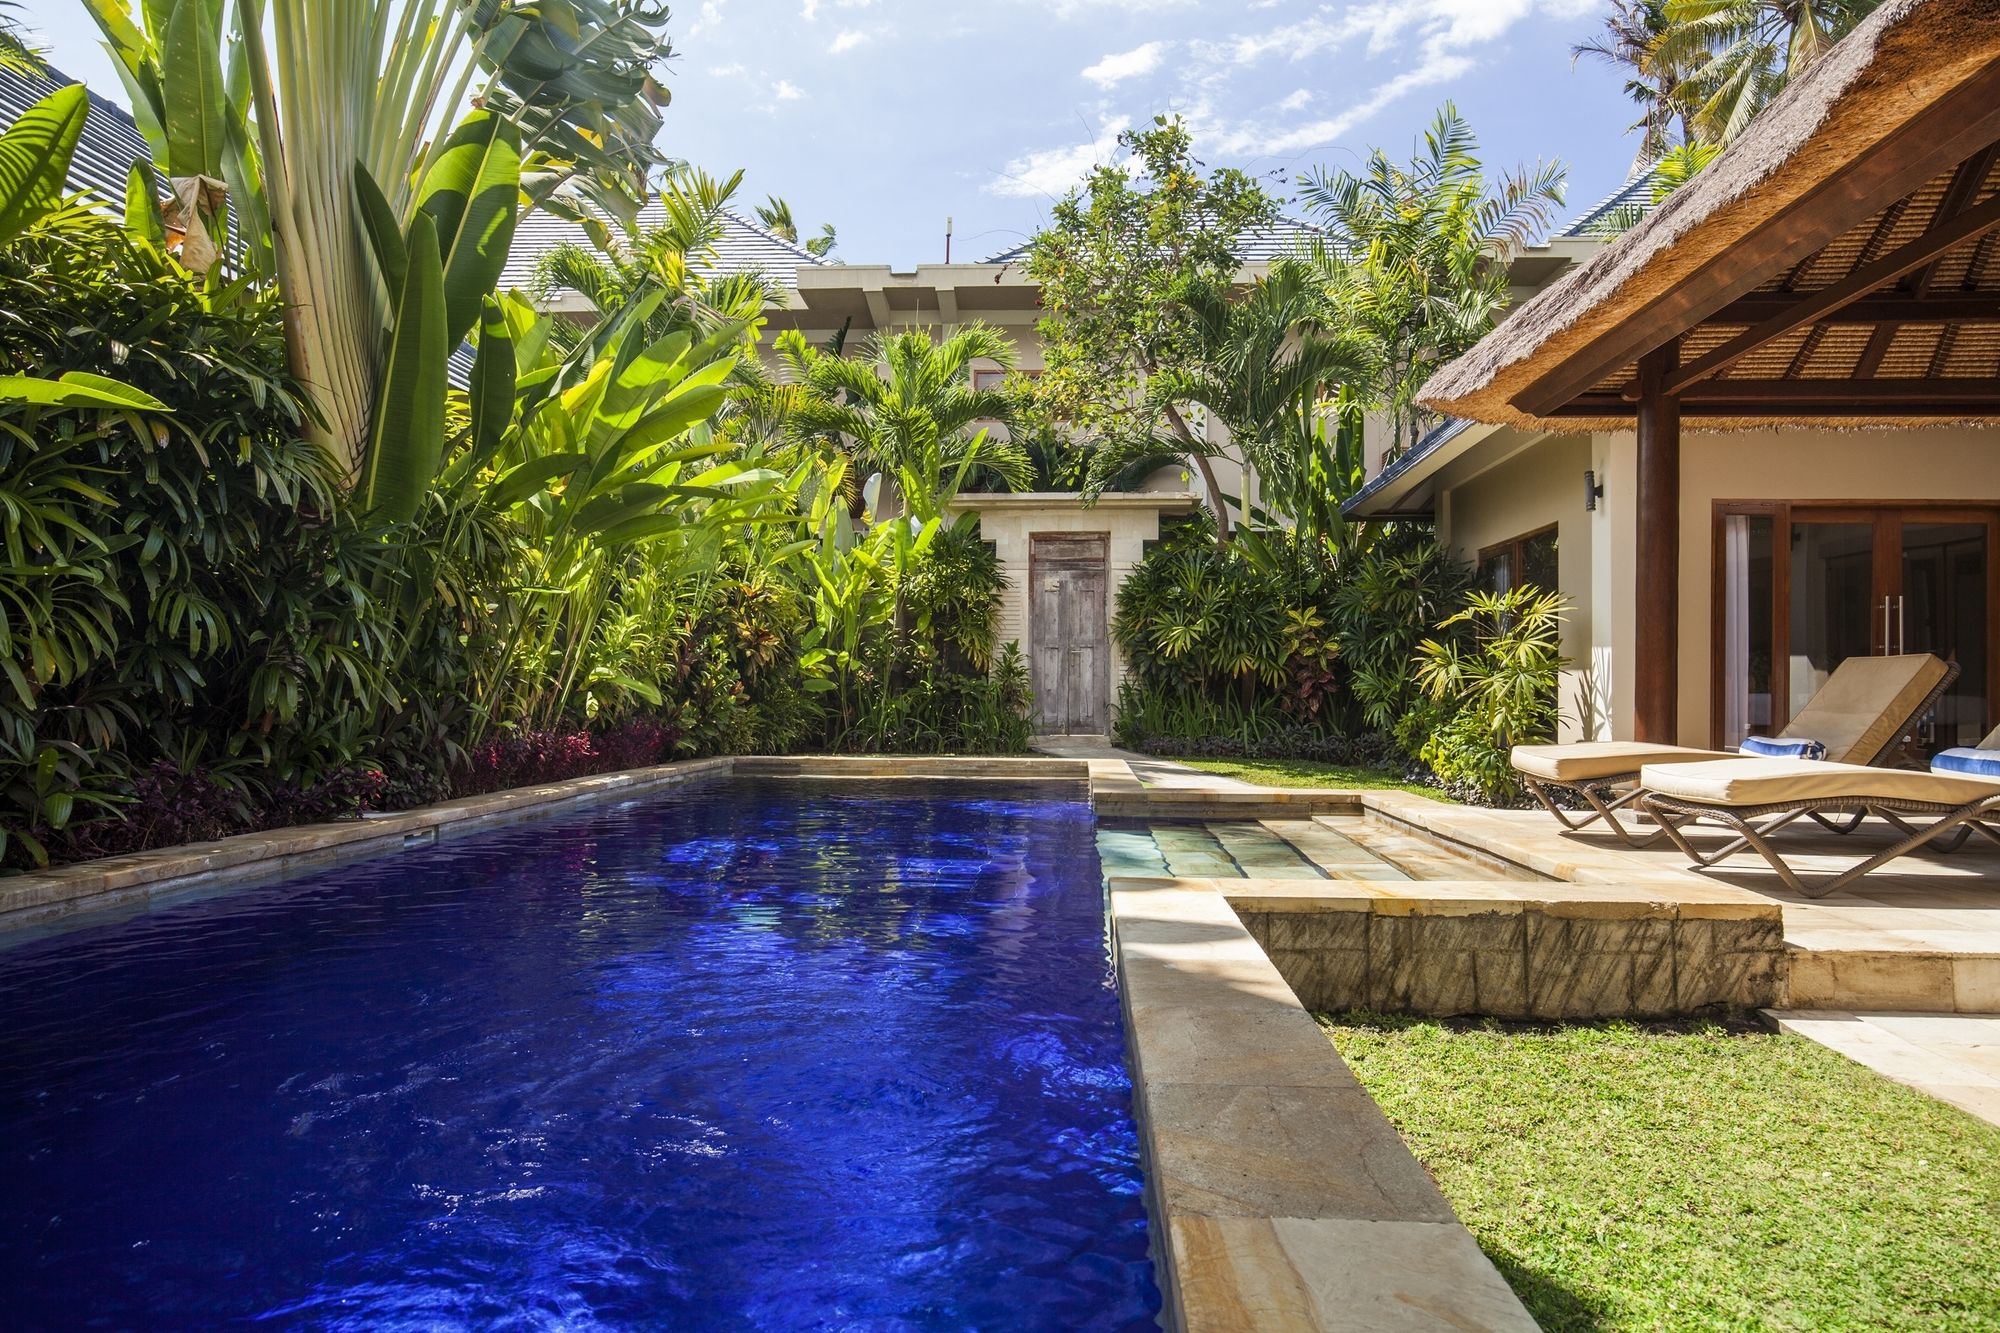 The Lovina Bali Villas